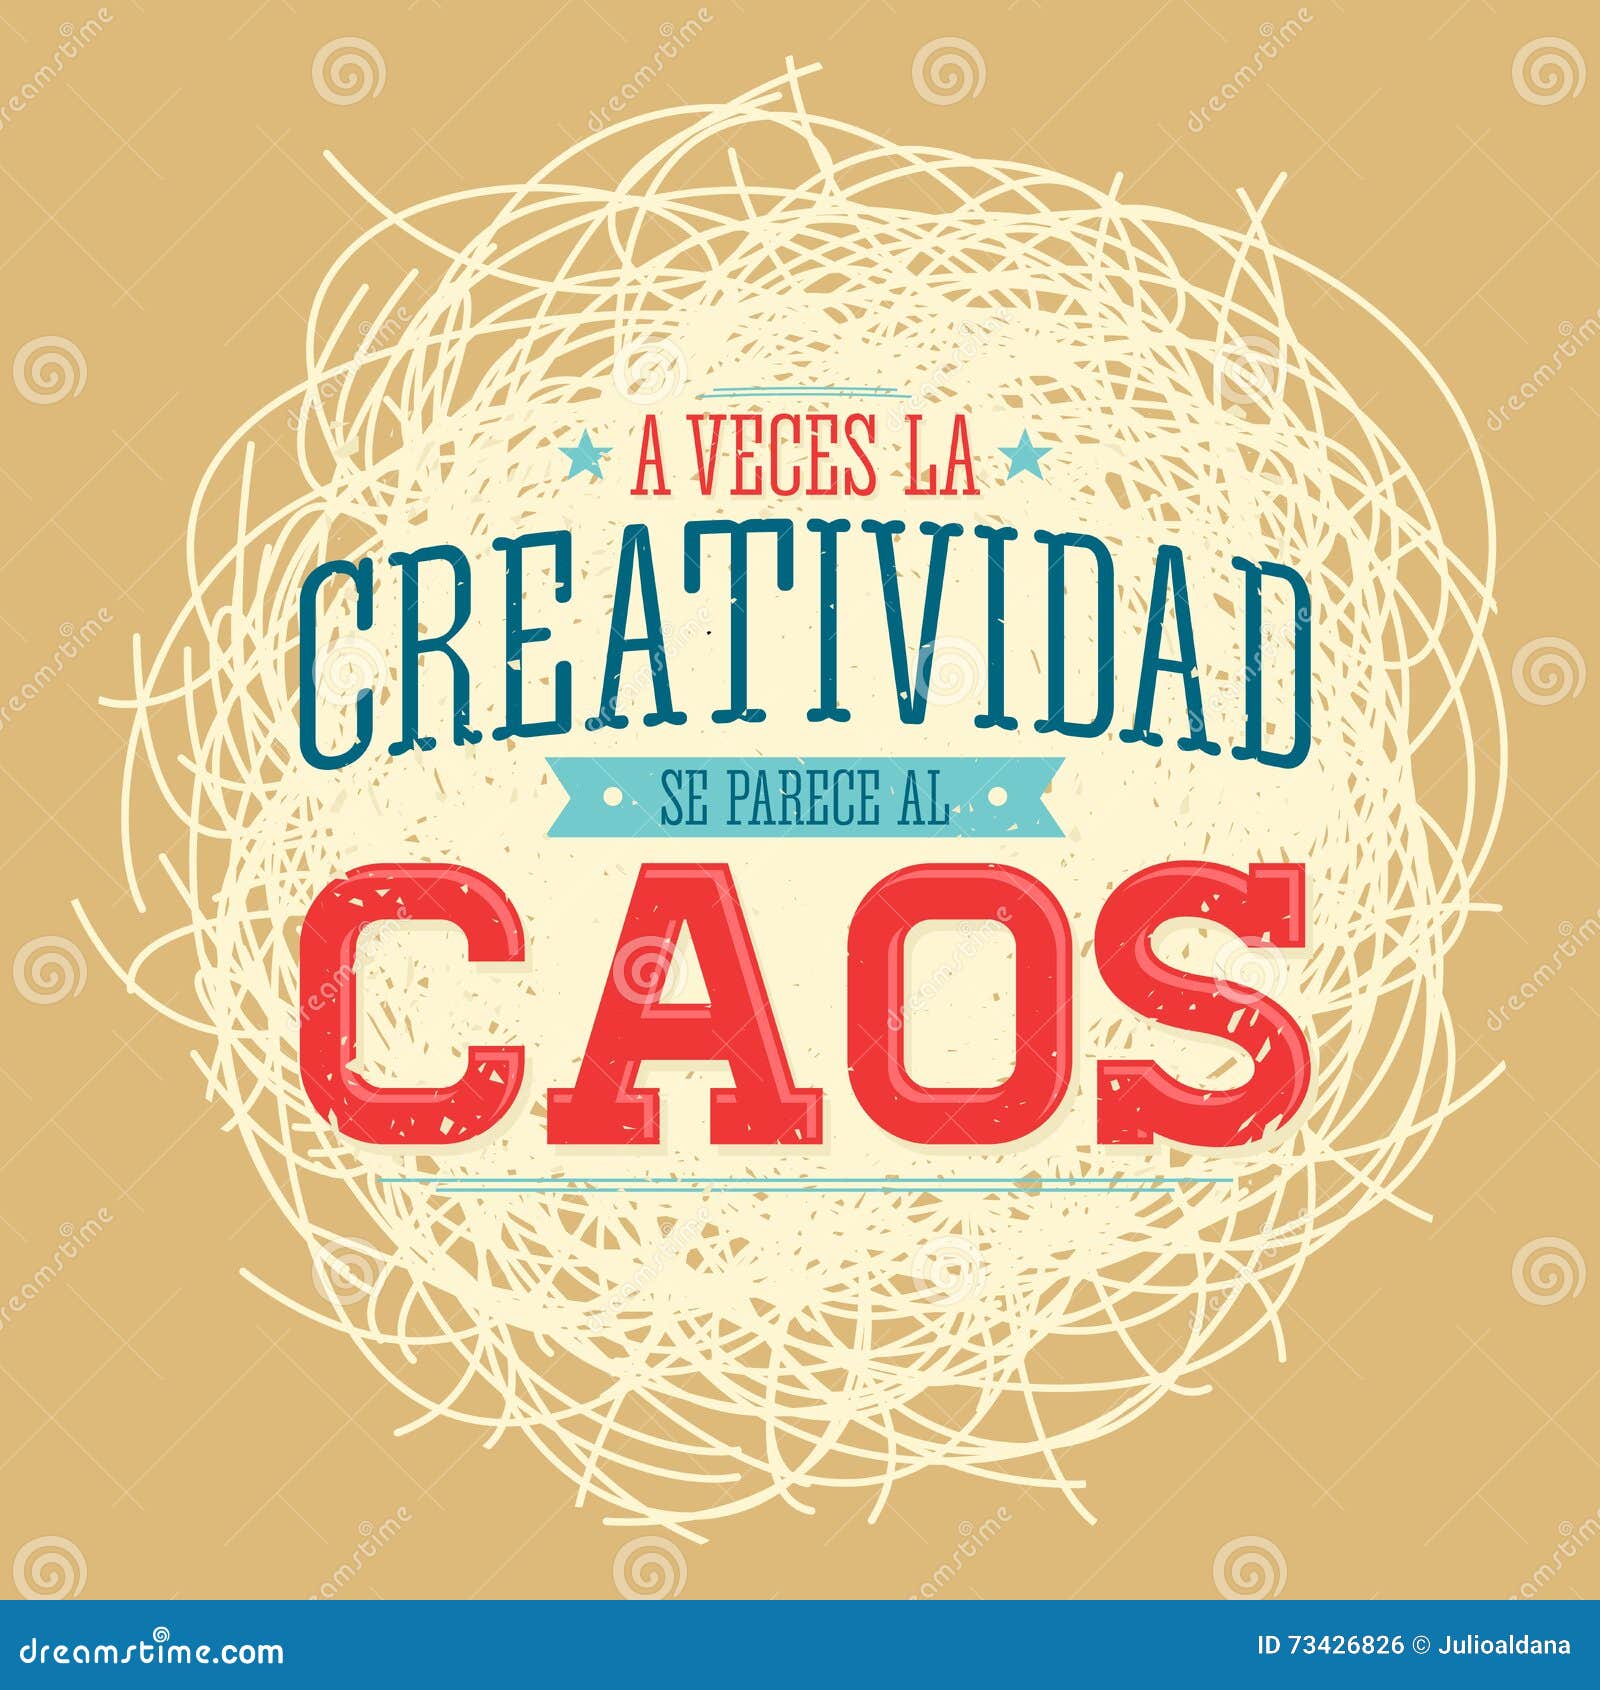 a veces la creatividad se parece al caos - creativity sometimes looks like chaos spanish text